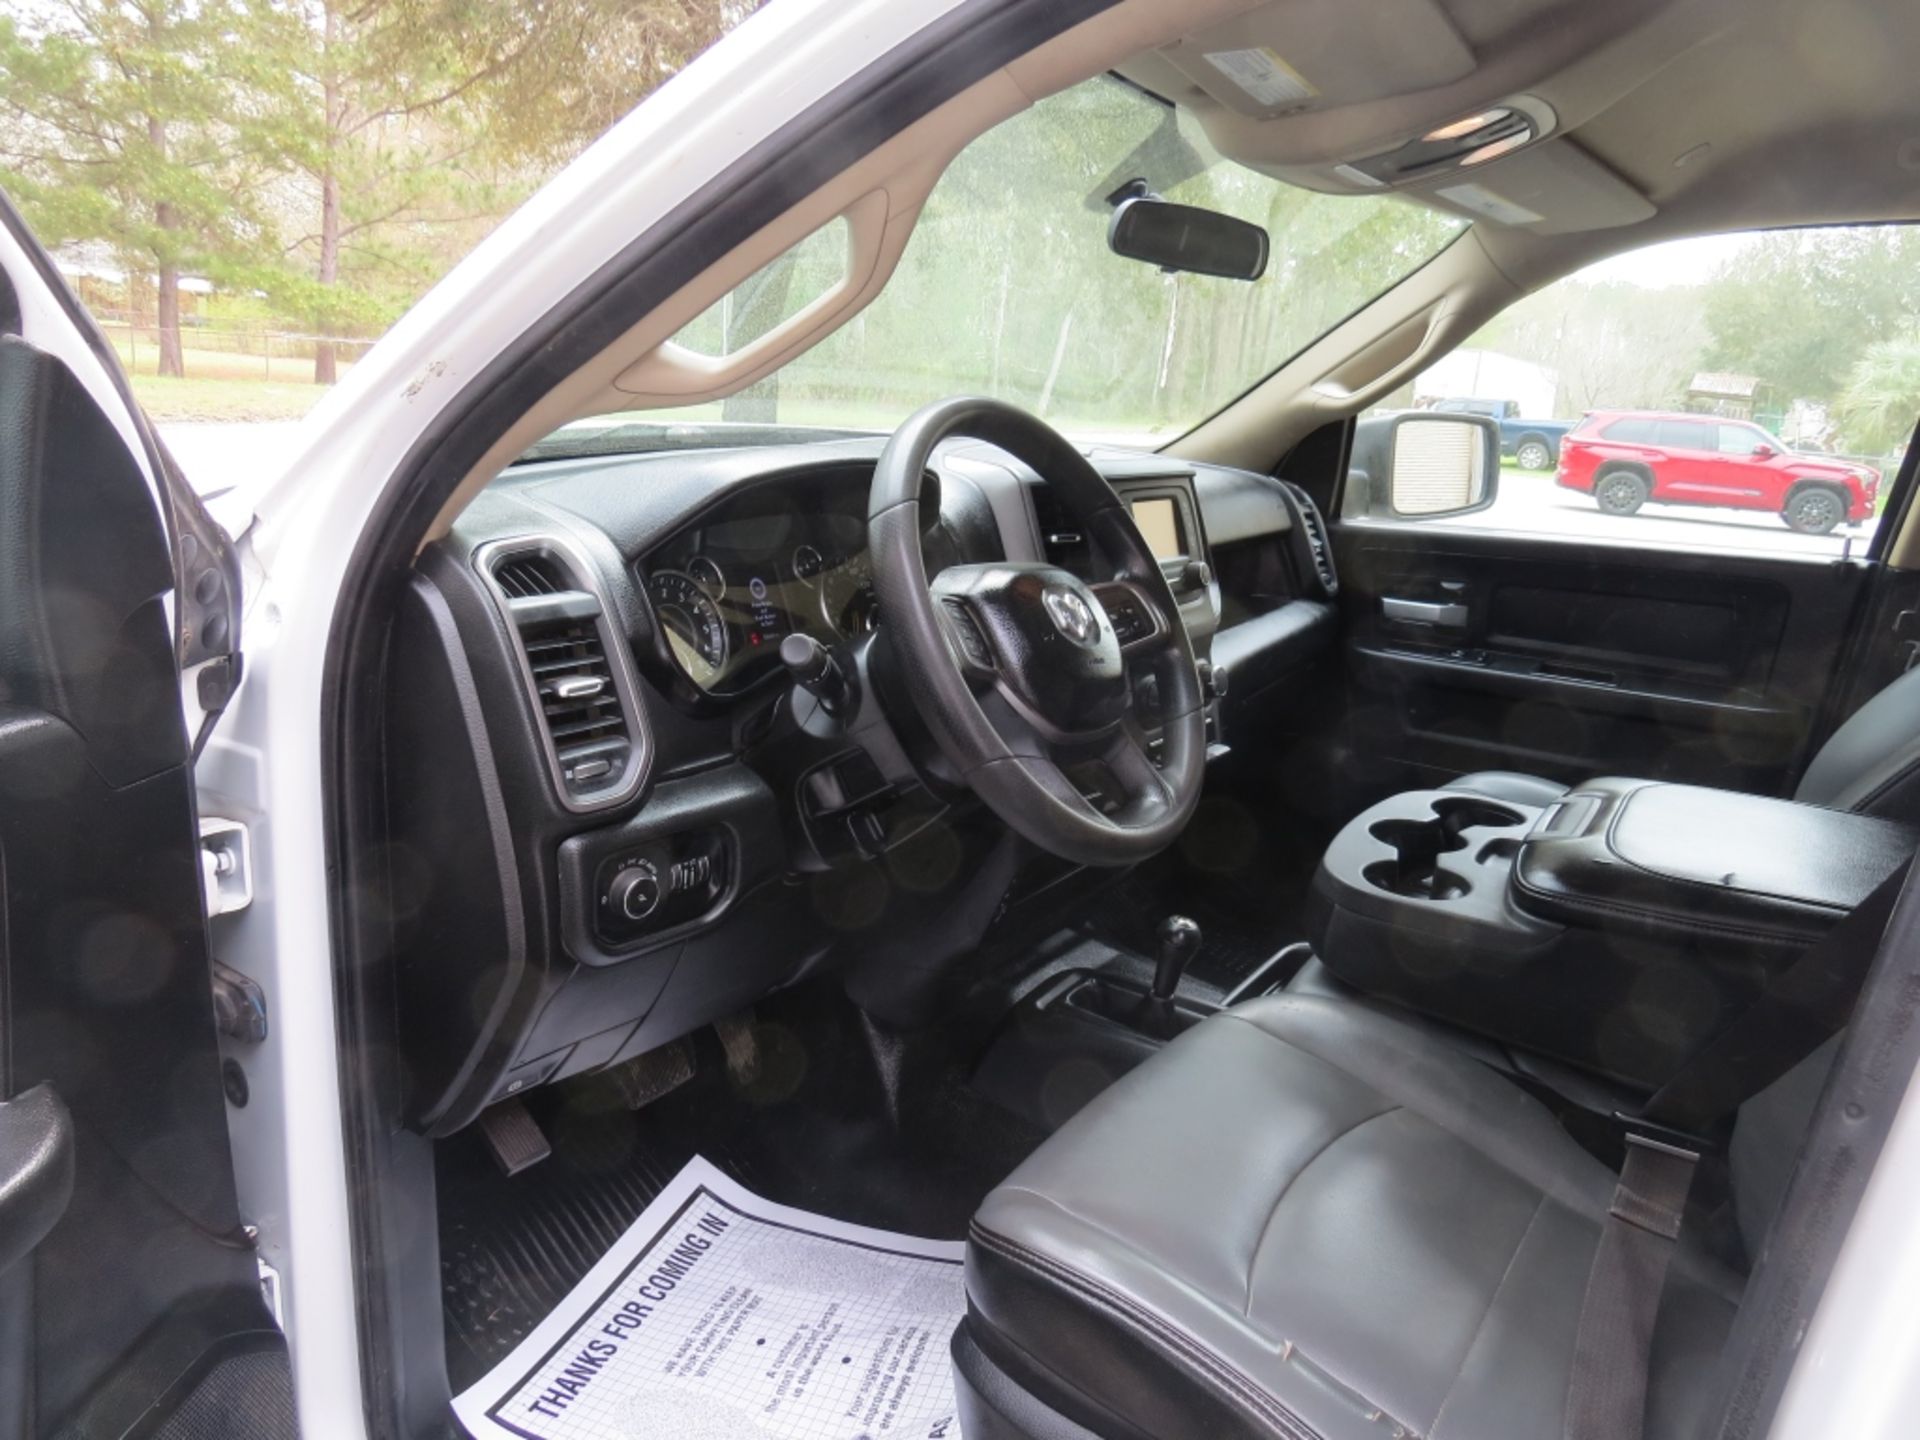 2019 Dodge Ram 2500 6.4L Hemi 4x4 VIN: 3C6UR5HJ1KG627426 56,643 miles showing 4 Door Automatic - Image 6 of 16